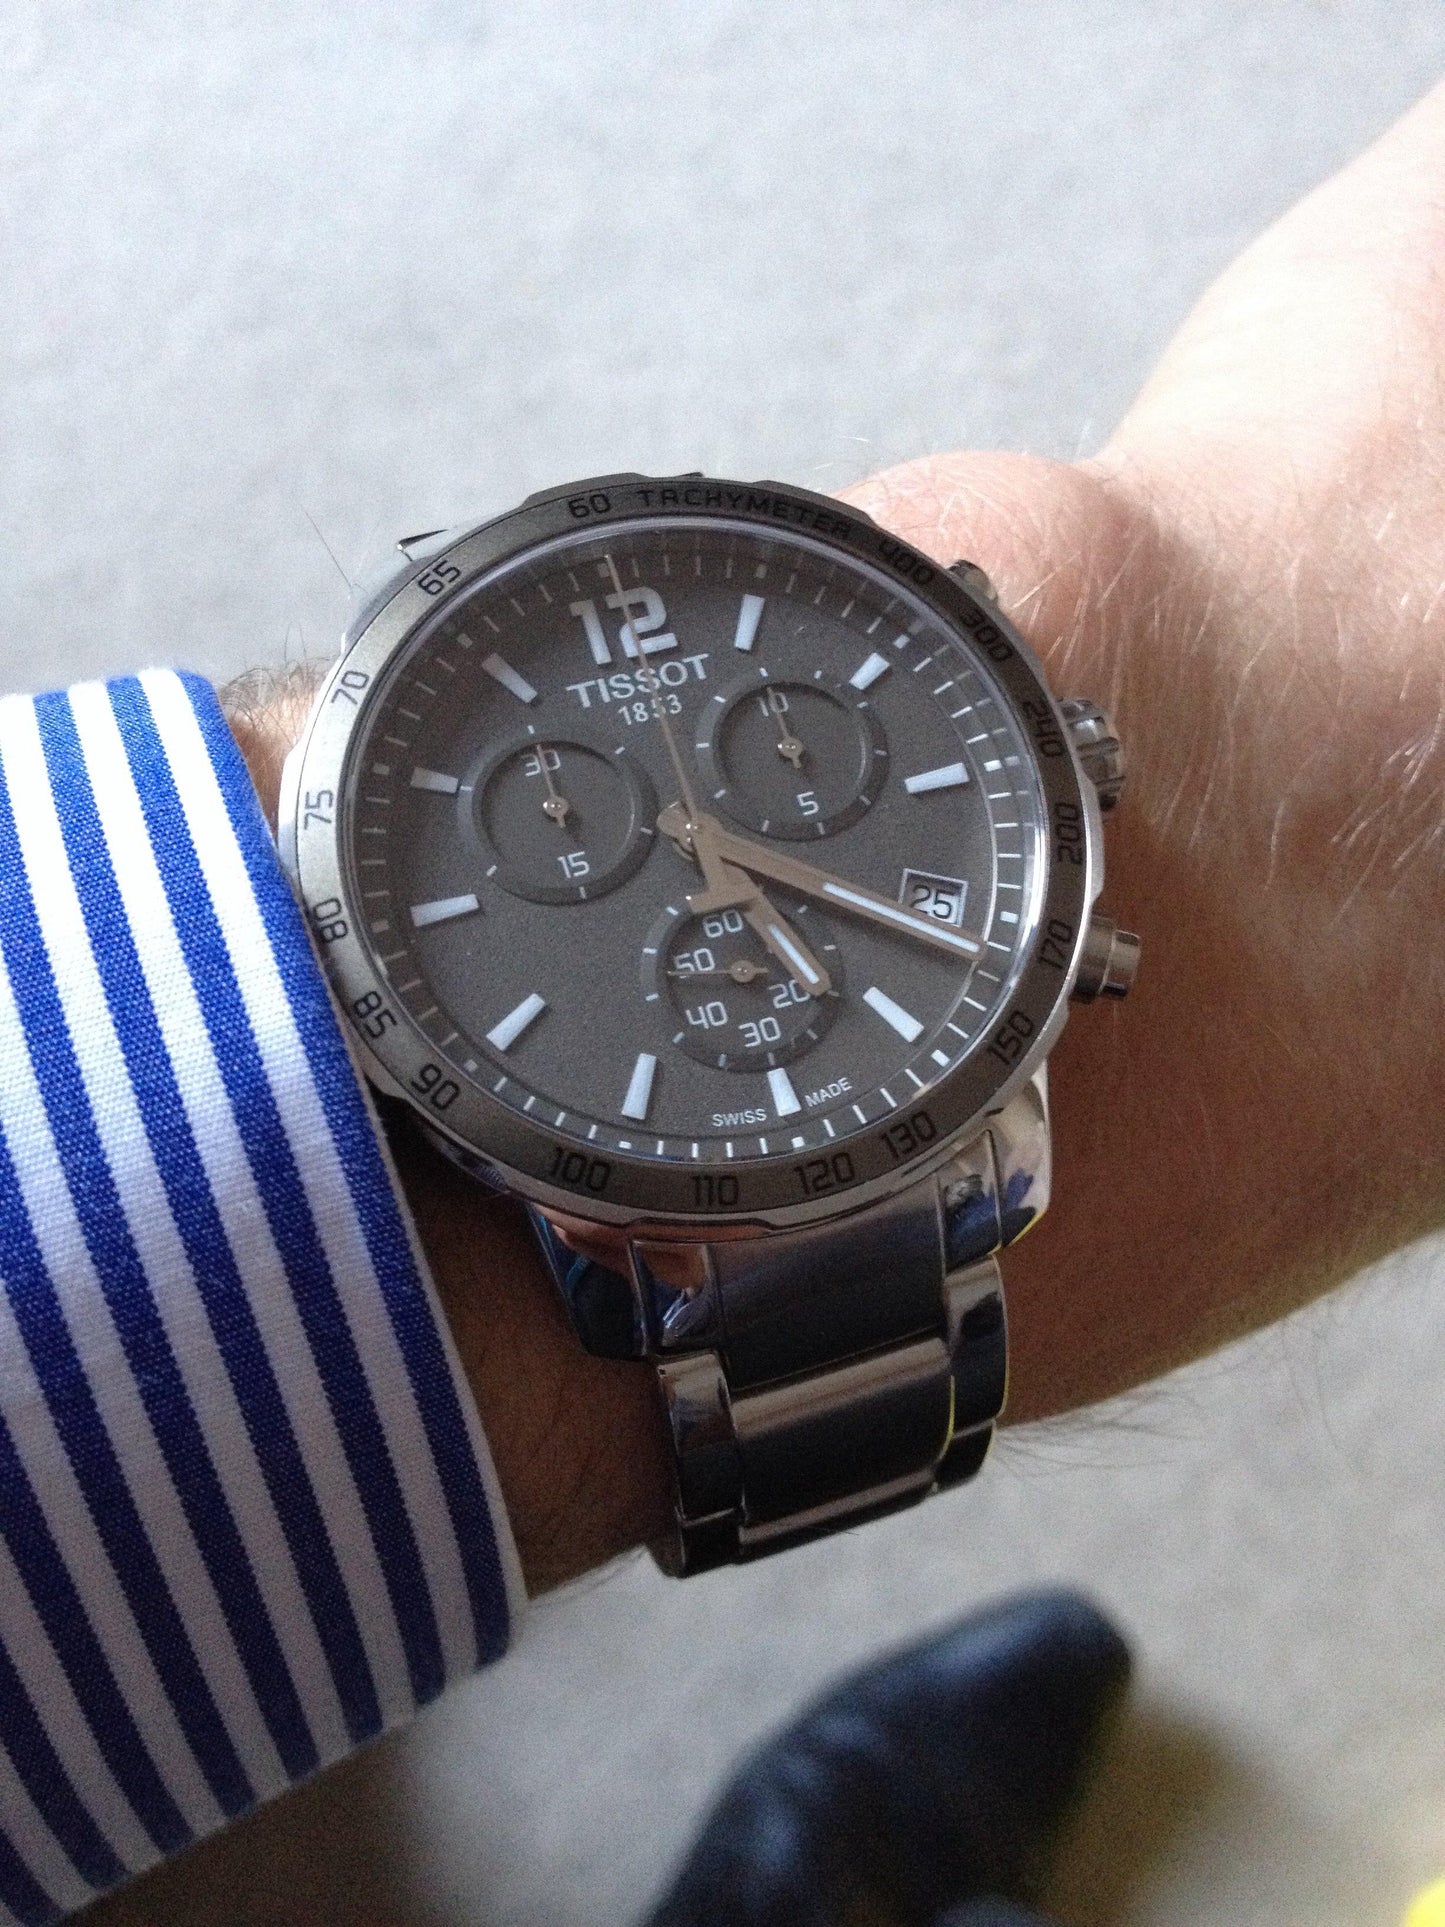 Tissot Swiss Made T-Sport Quickster Chronograph Men's Stainless Steel Watch T0954171106700 - Diligence1International